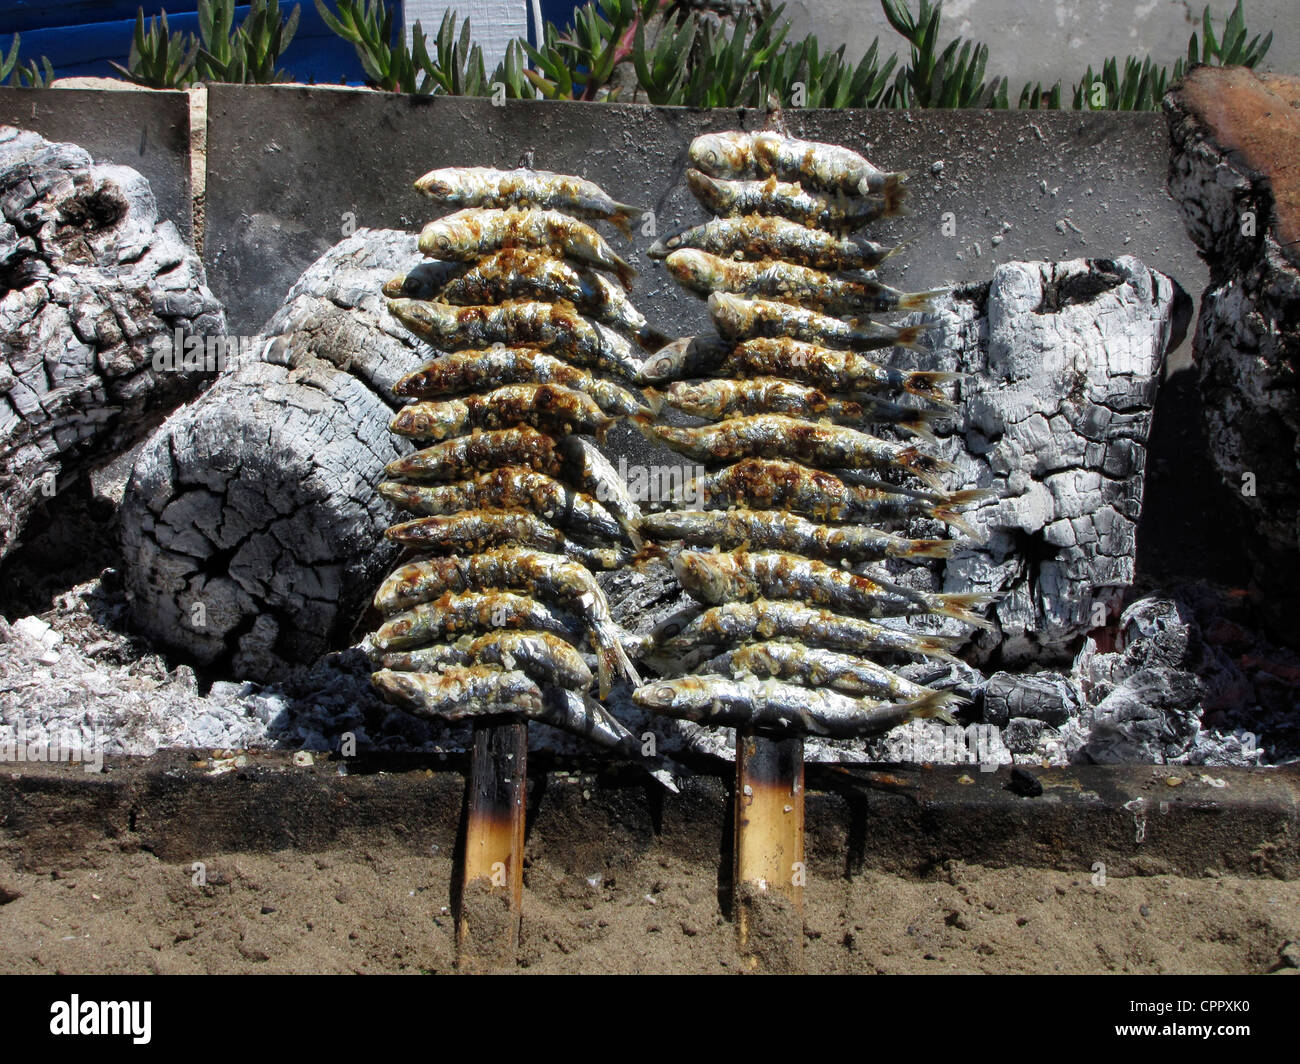 Espagne Andalousie Costa del Sol Marbella un barbecue de poissons Sardine rôti Banque D'Images